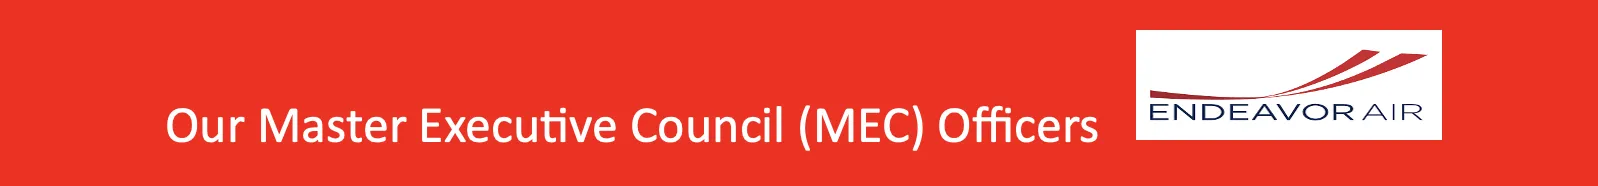 MEC Banner